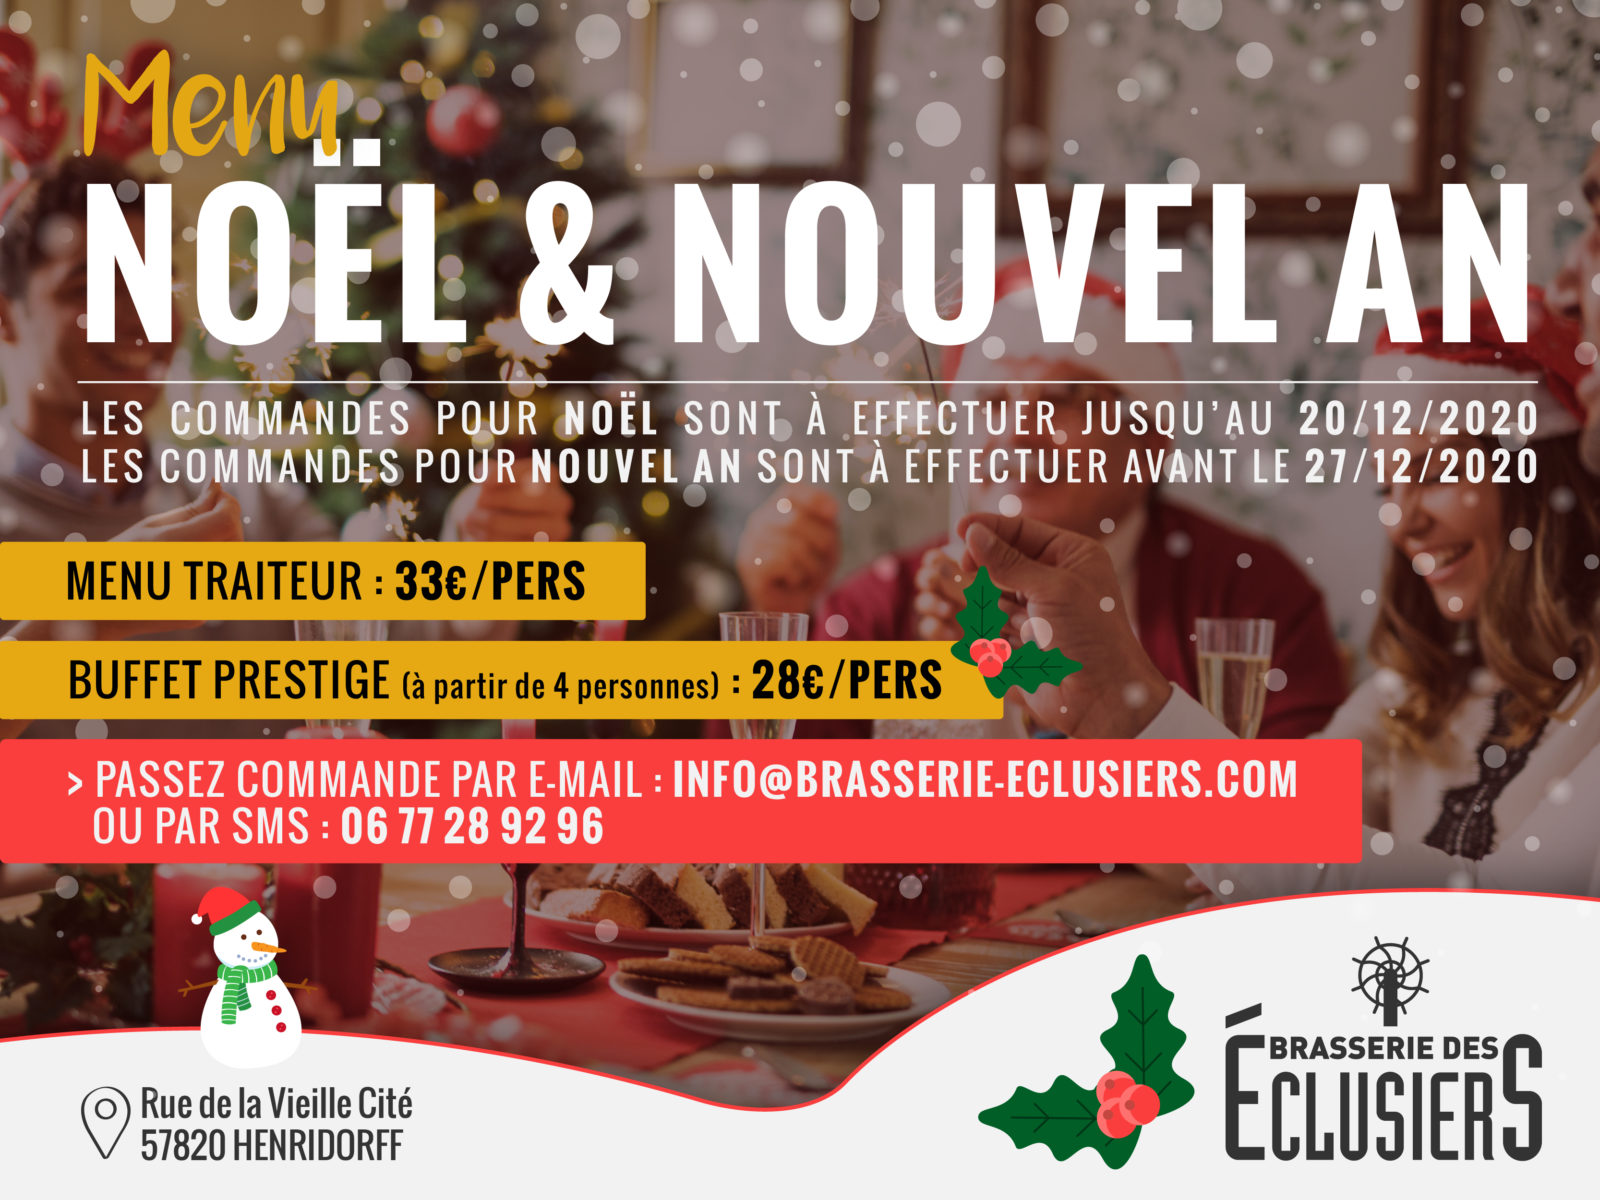 Menu Noël & Nouvel An 2020 - Brasserie des Eclusiers